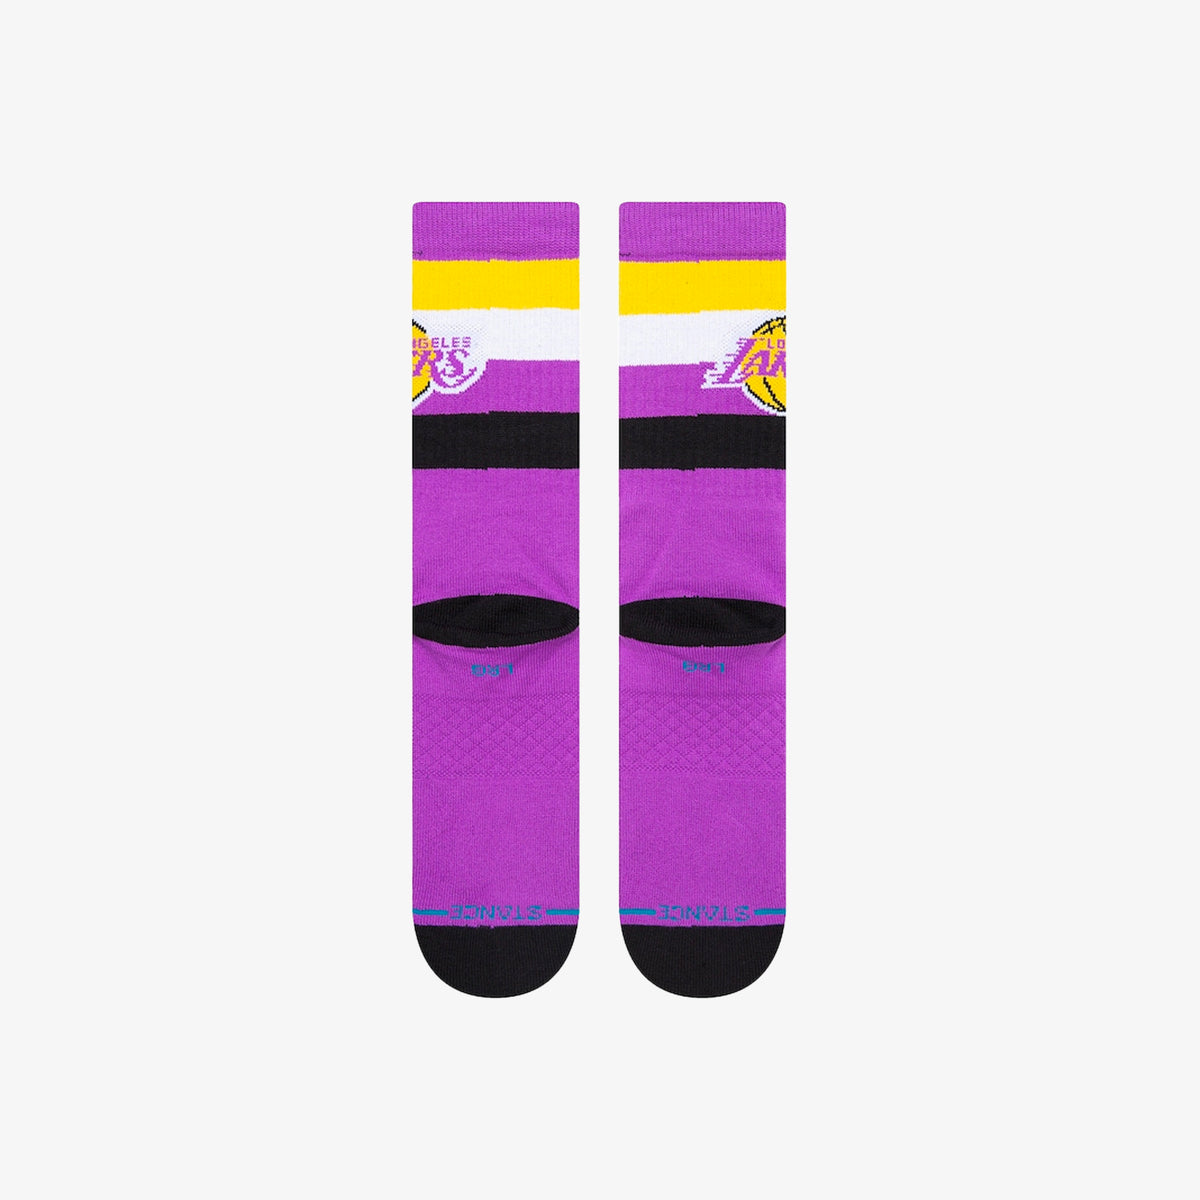 Los Angeles Lakers ST Crew Socks